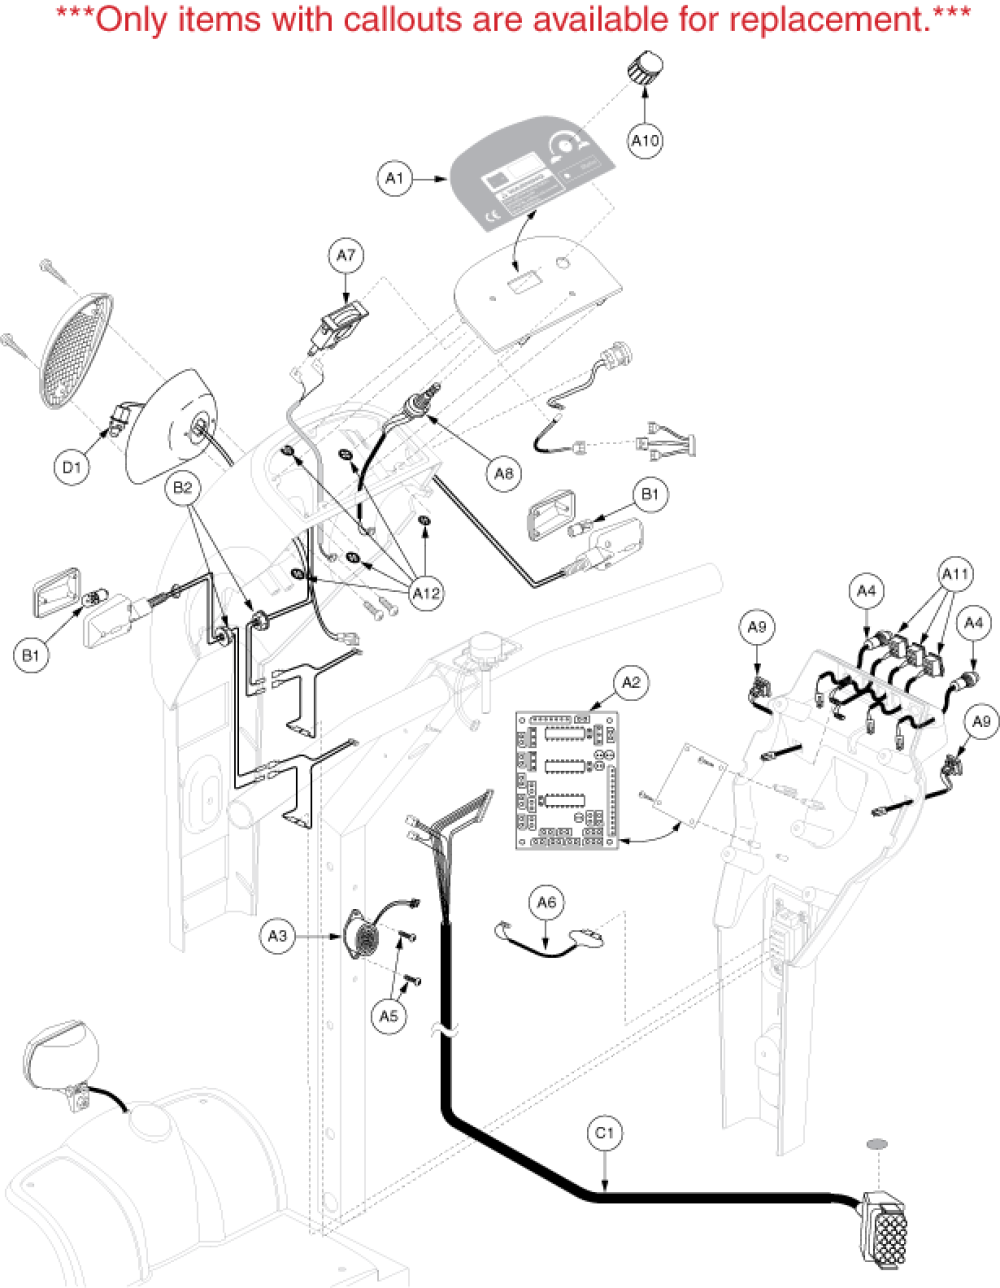 Electronics Assembly - Console parts diagram